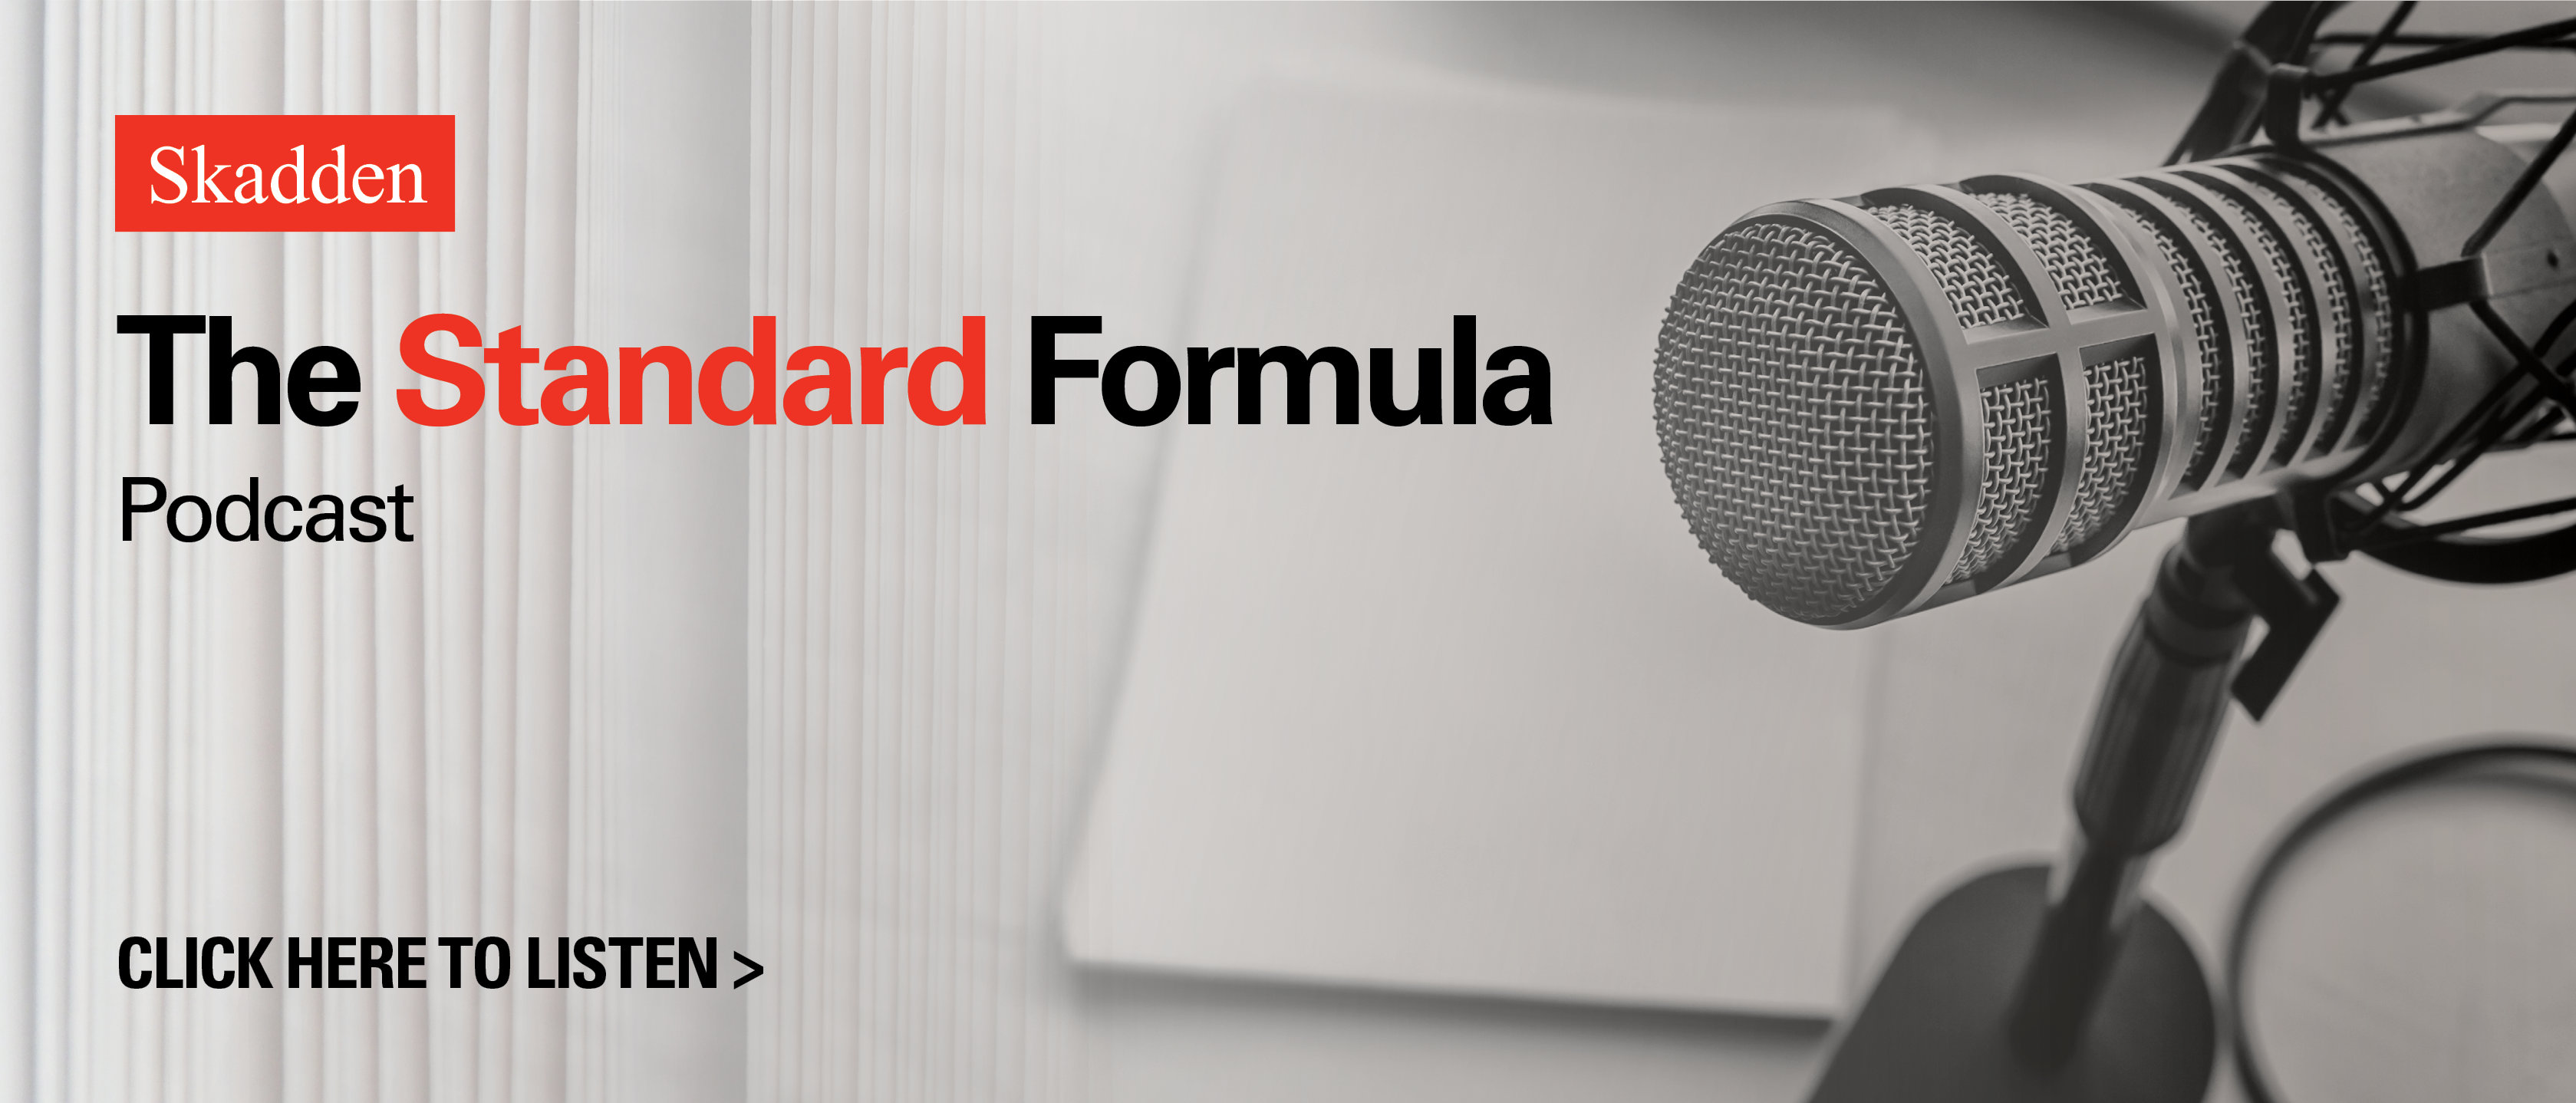 Skadden | The Standard Formula Podcast - Click Here to Listen